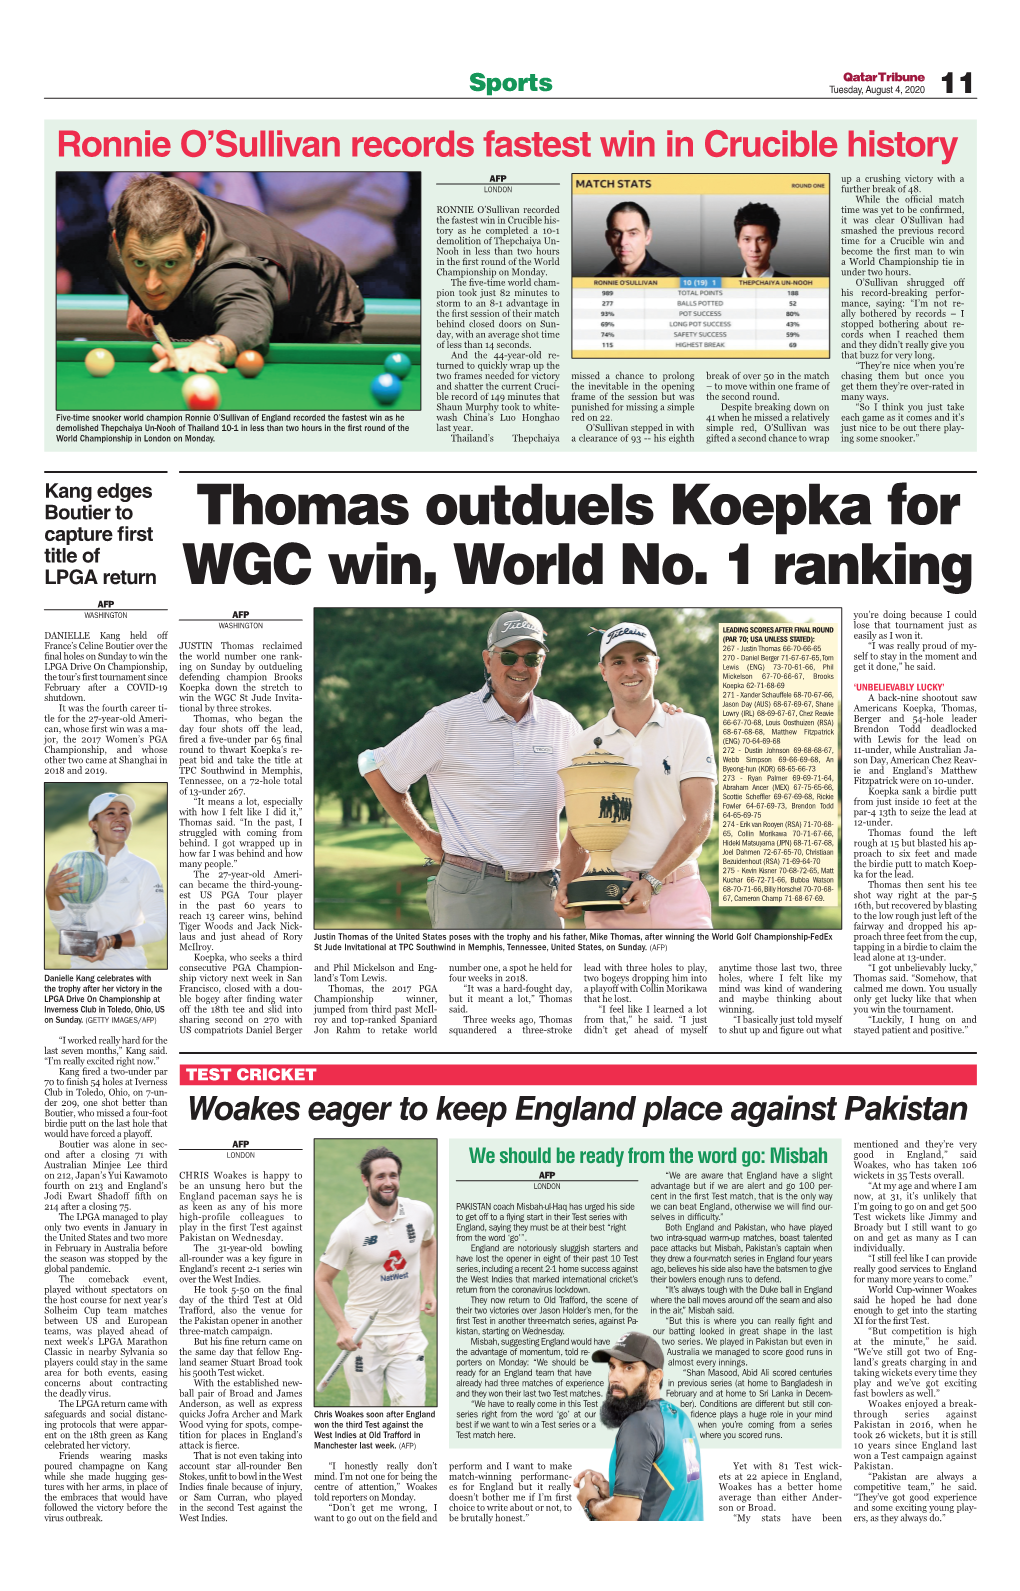 Thomas Outduels Koepka for WGC Win, World No. 1 Ranking